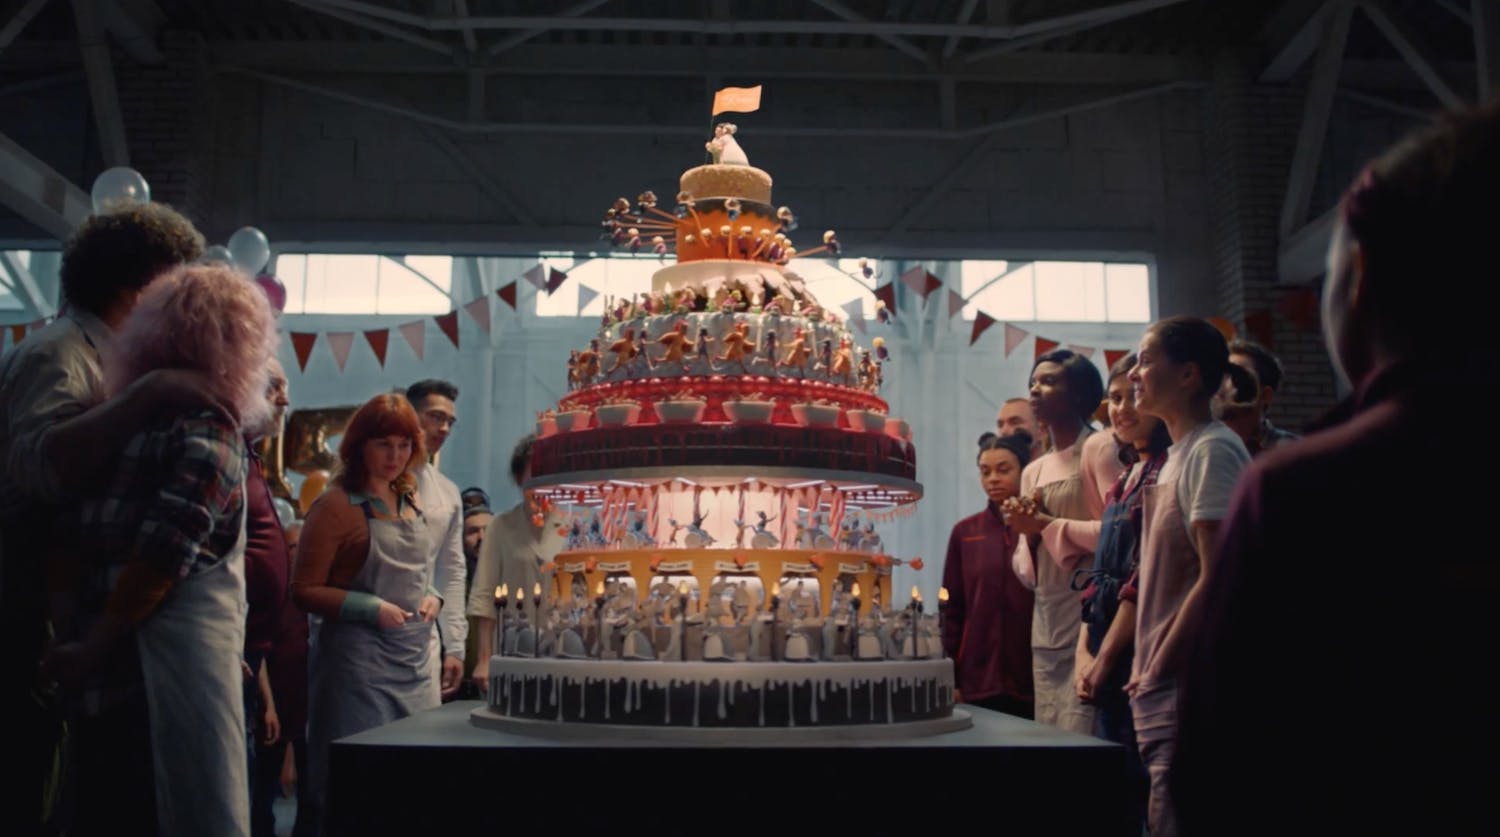 Movie themed birthday cake! - Decorated Cake by Bella's - CakesDecor